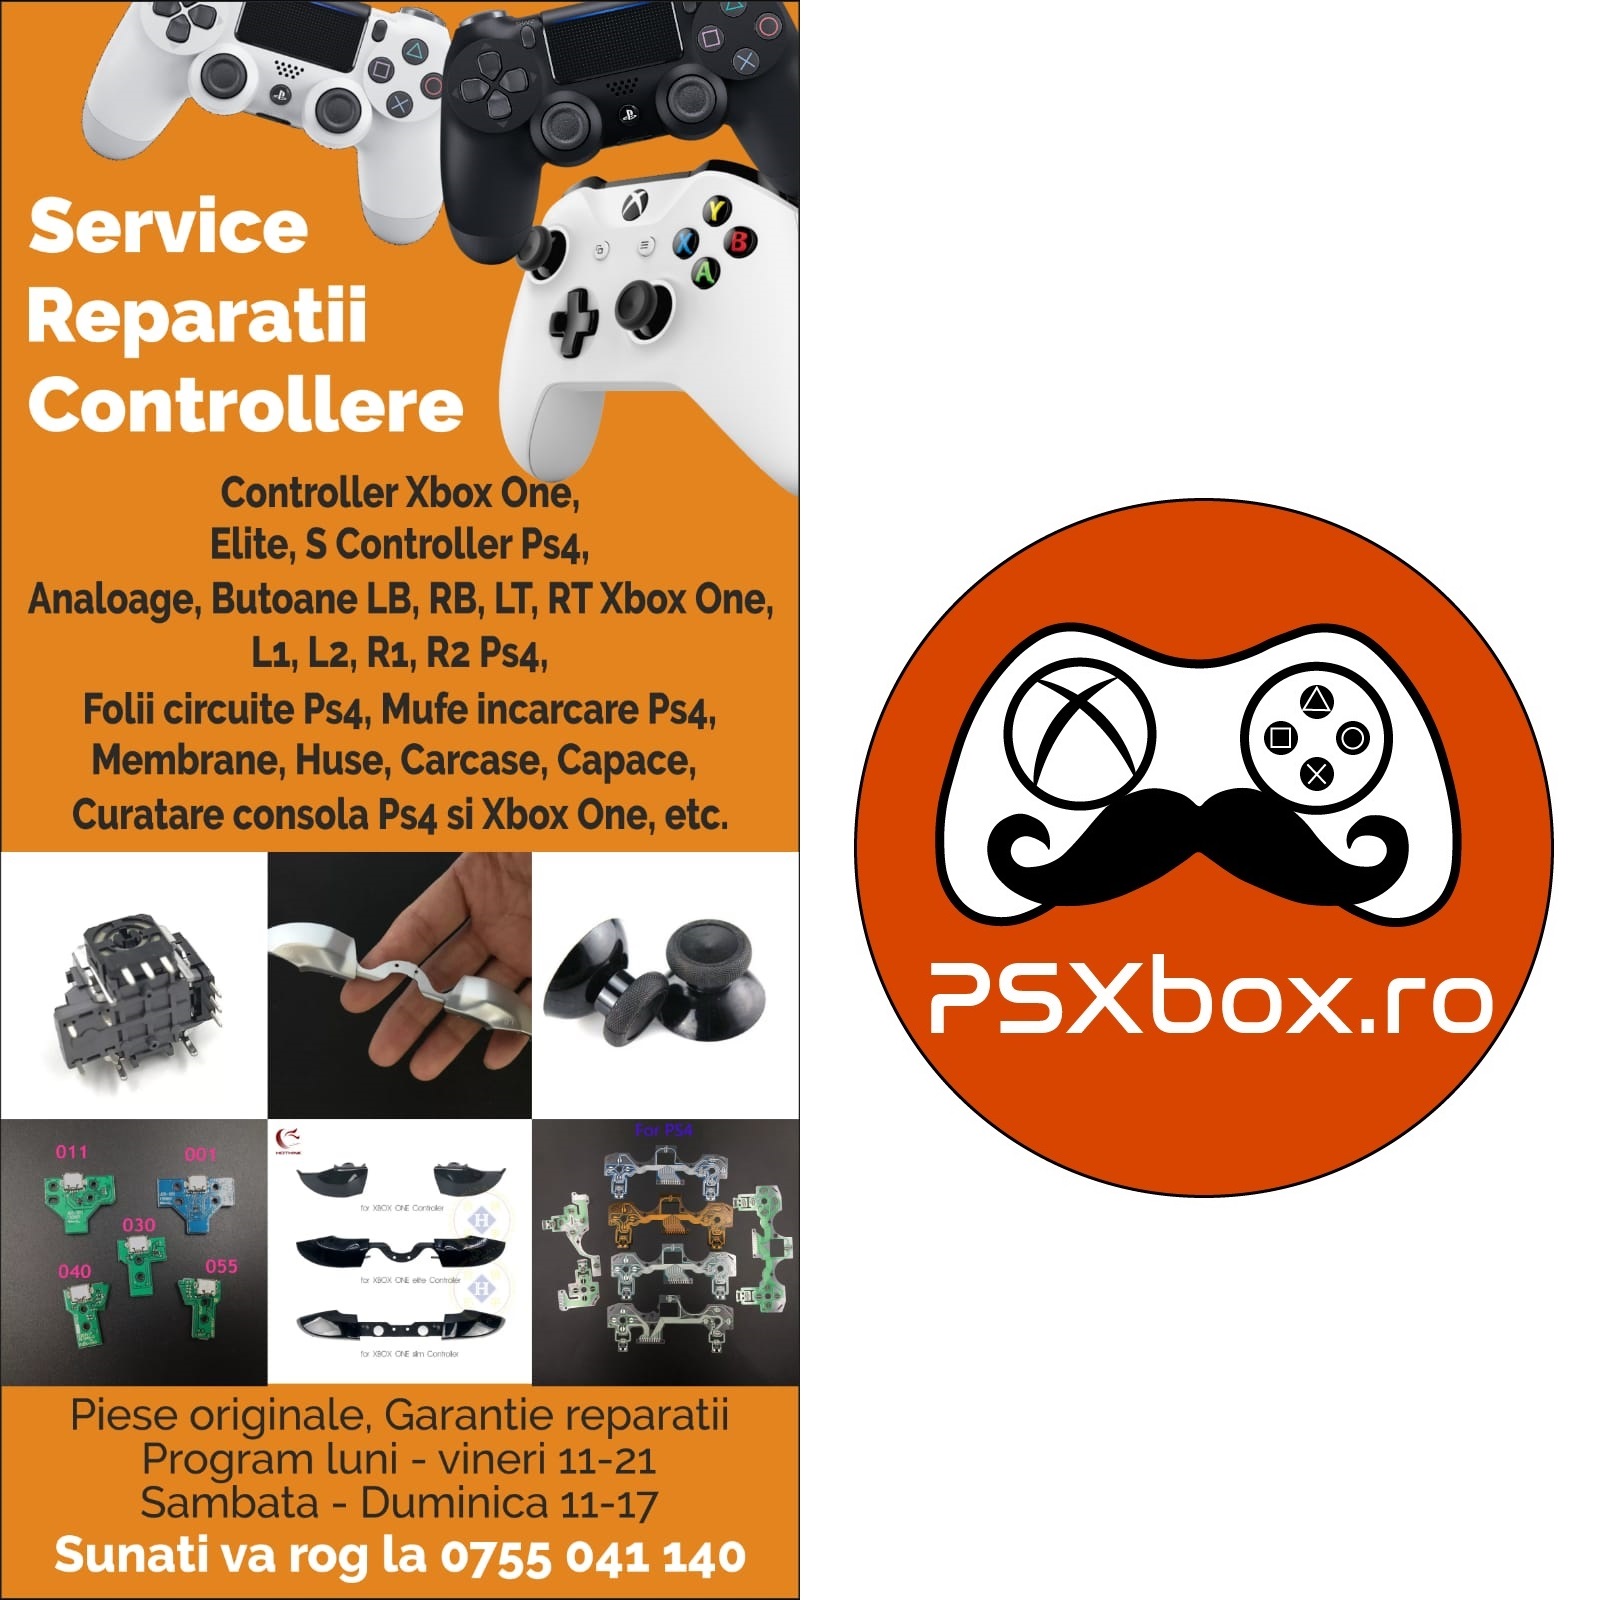 Reparatii Controller PS5 ( DualShock 4 PlayStation) inlocuire analog, modul de incarcare, inlocuire baterie, probleme conectare 0755041140